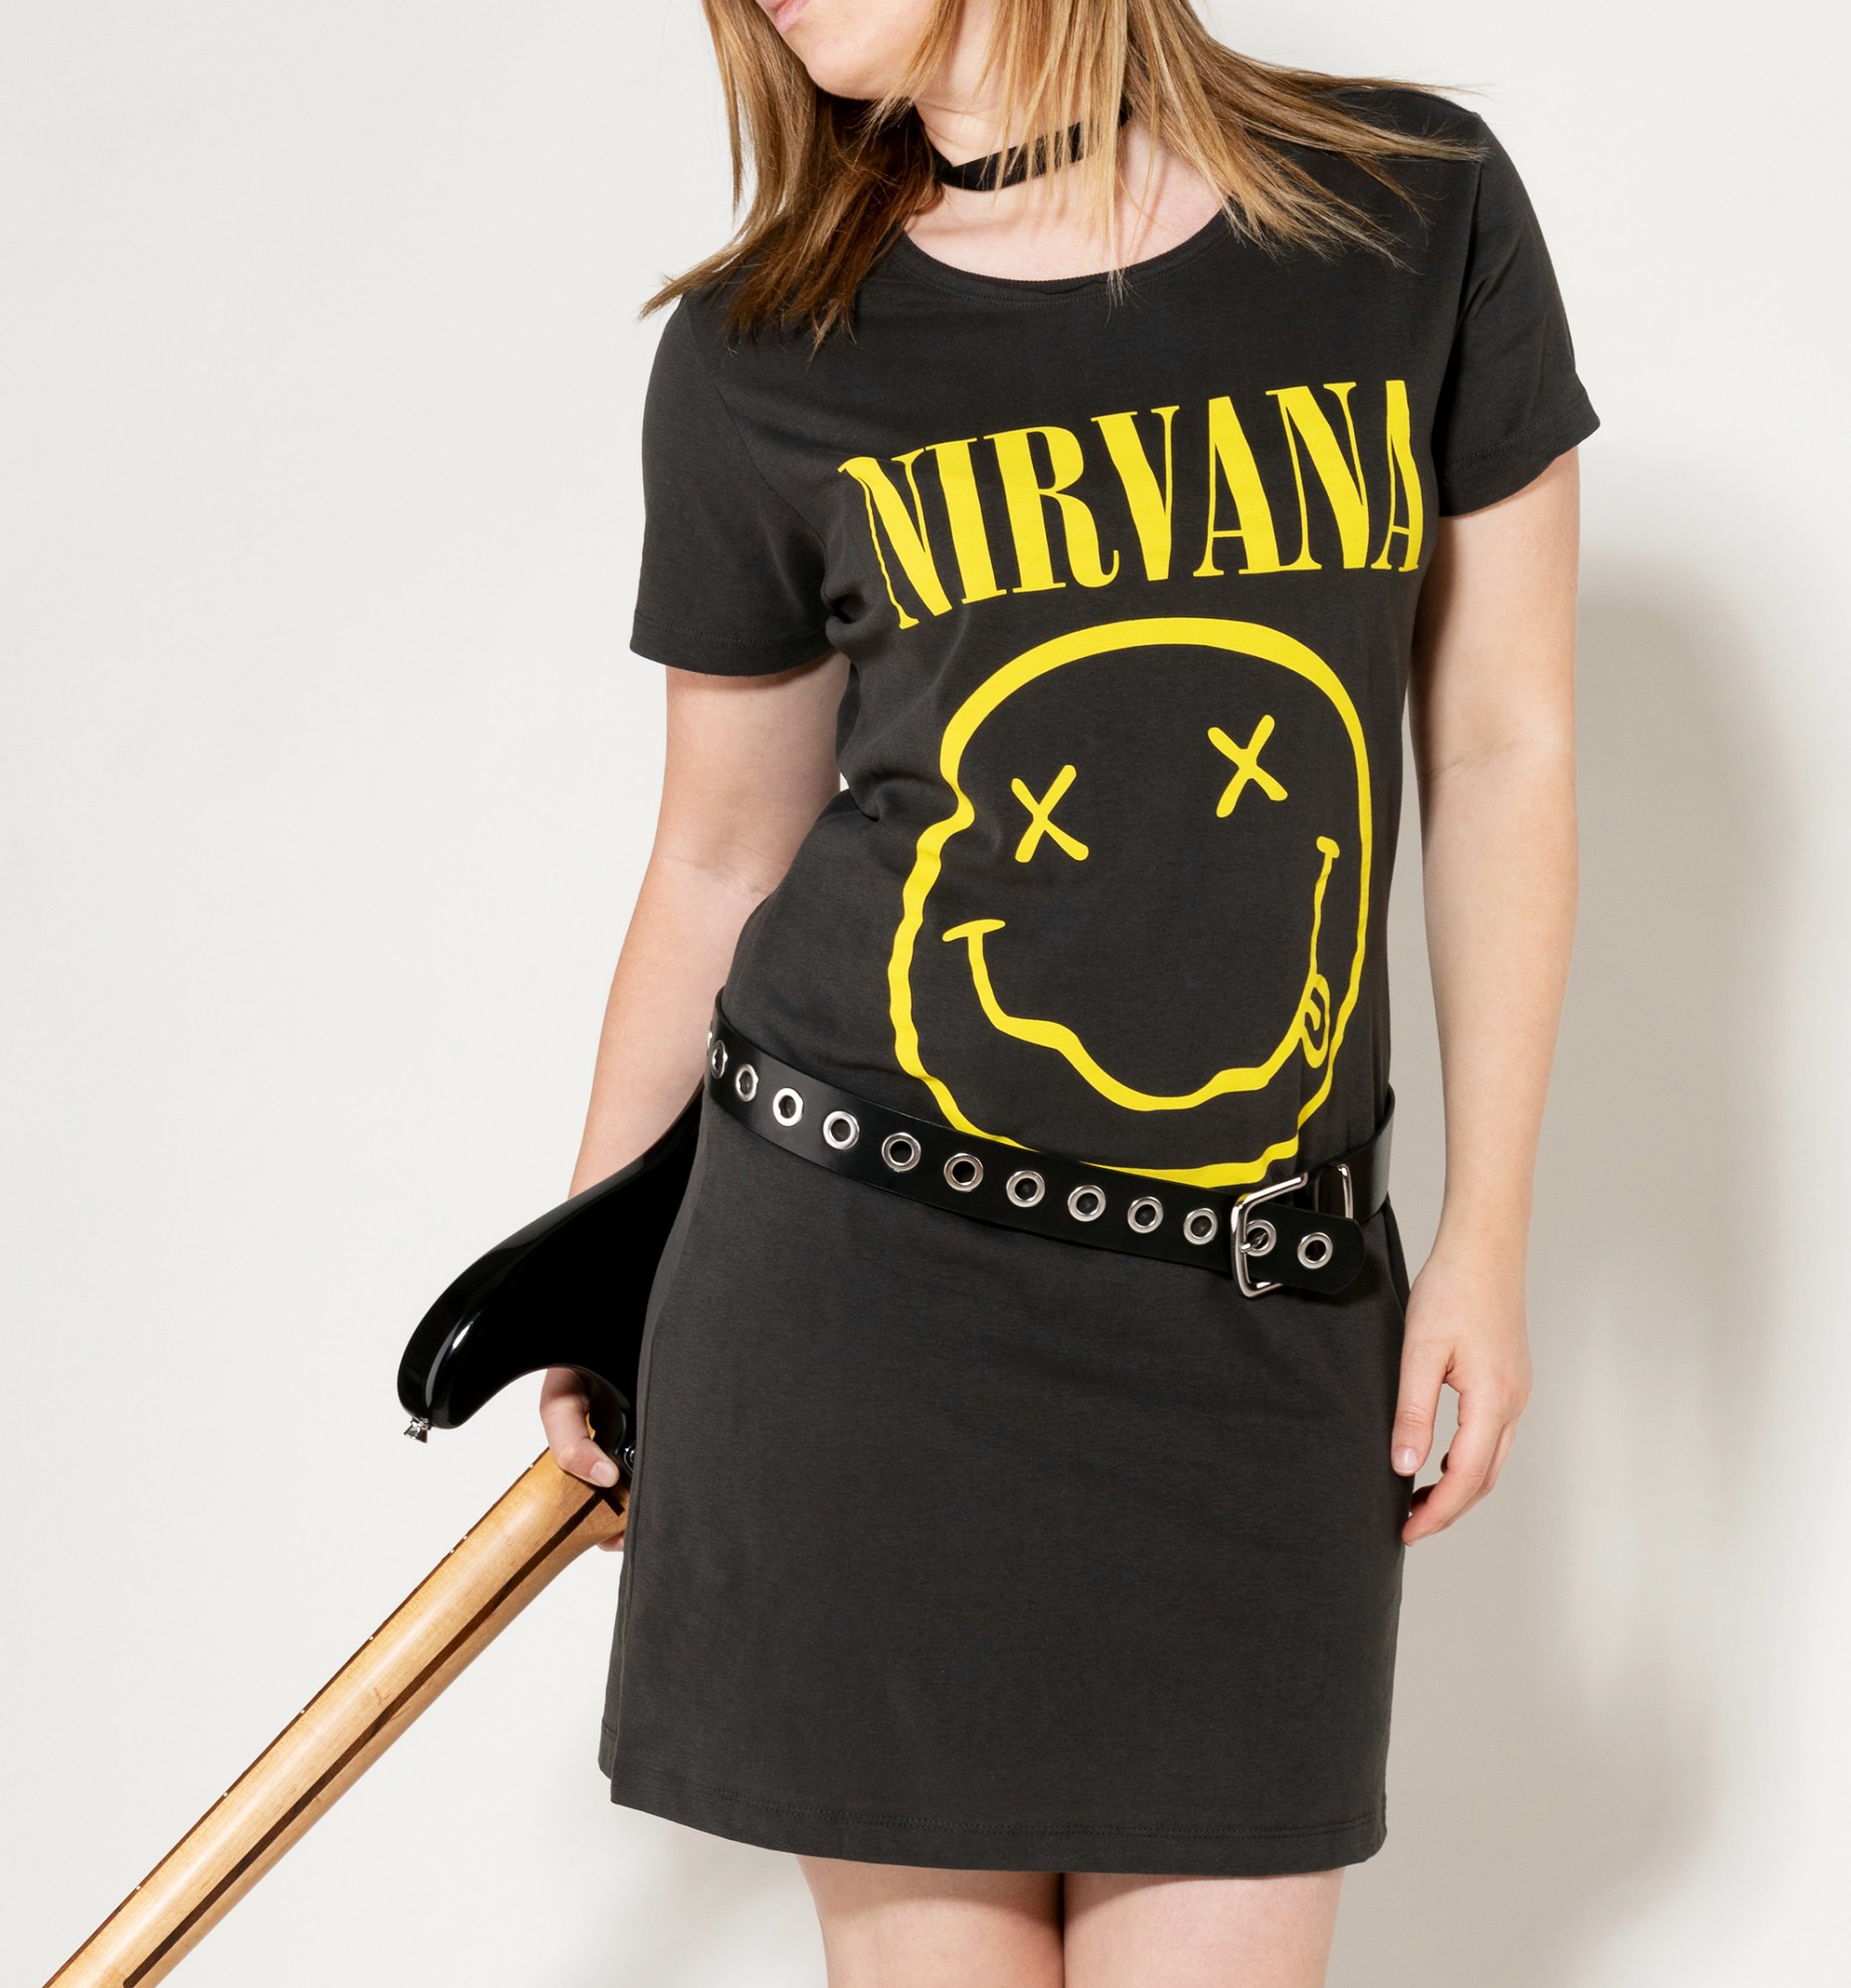 Nirvana t. Urban Outfitters Nirvana футболка. Nirvana Shirt. Футболка Нирвана MTV. Футболка Nirvana 2016 HM.